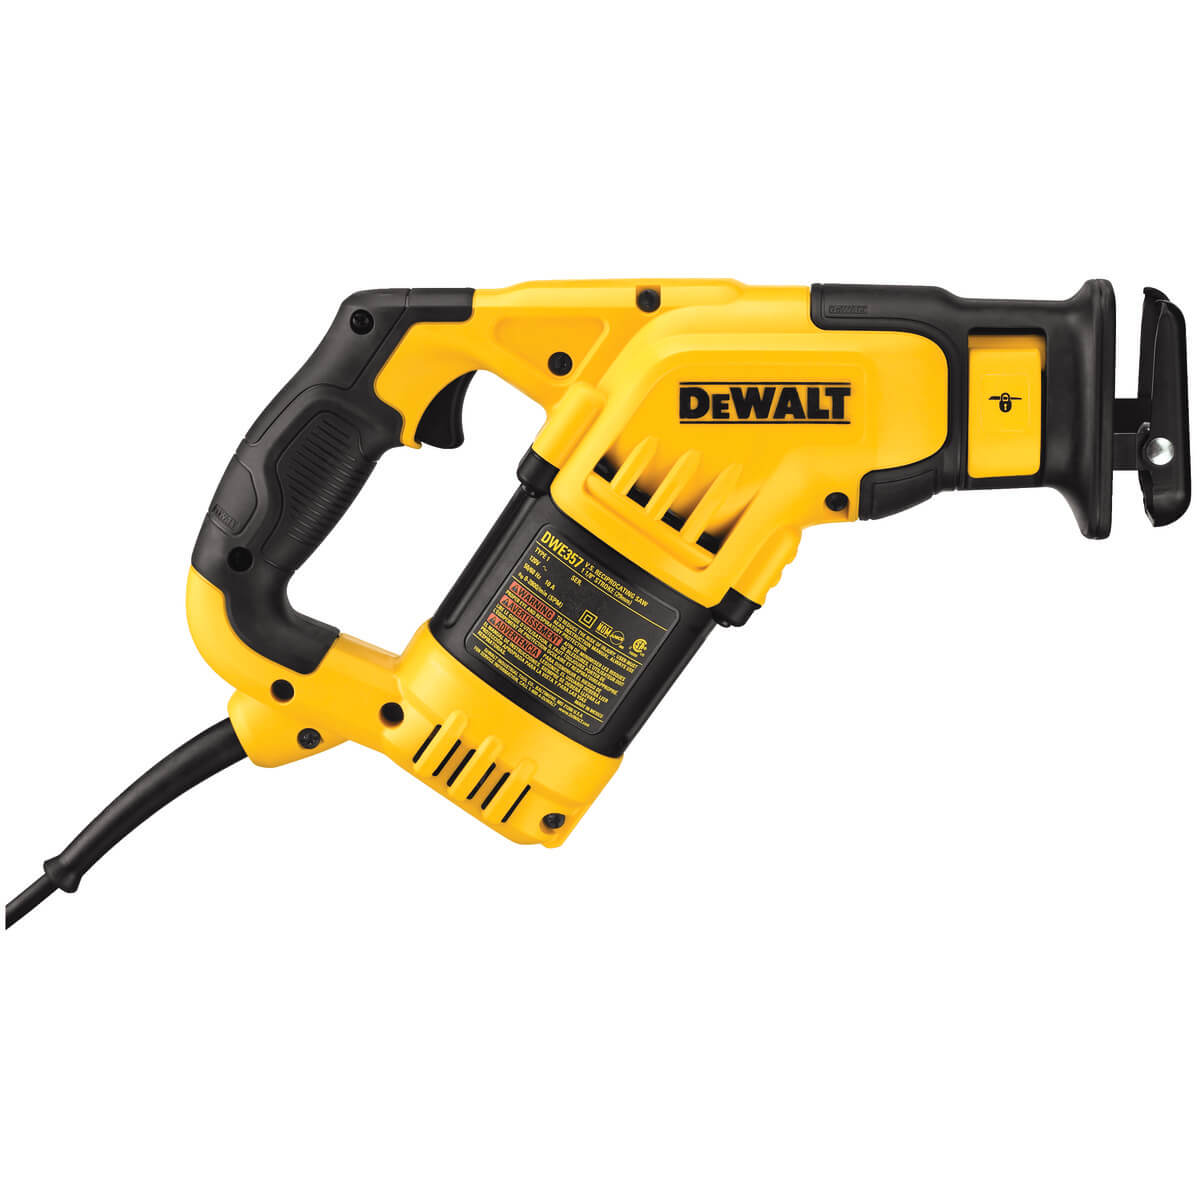 DeWalt dwe357 - 12 Amp Compact Reciprocating Saw - wise-line-tools